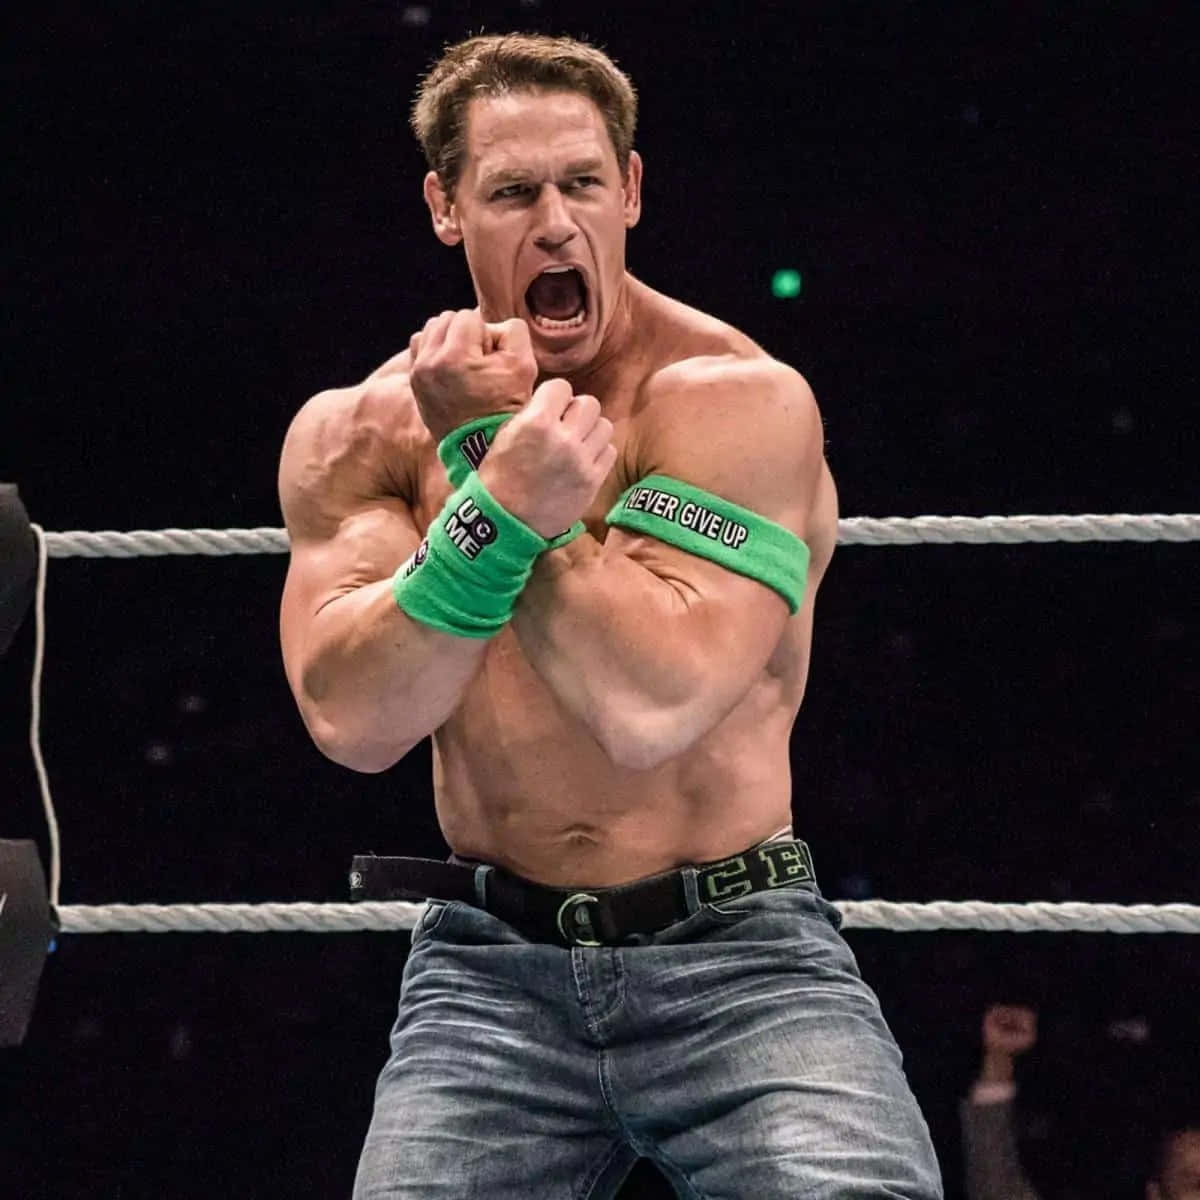 John Cena striking a pose in the ring